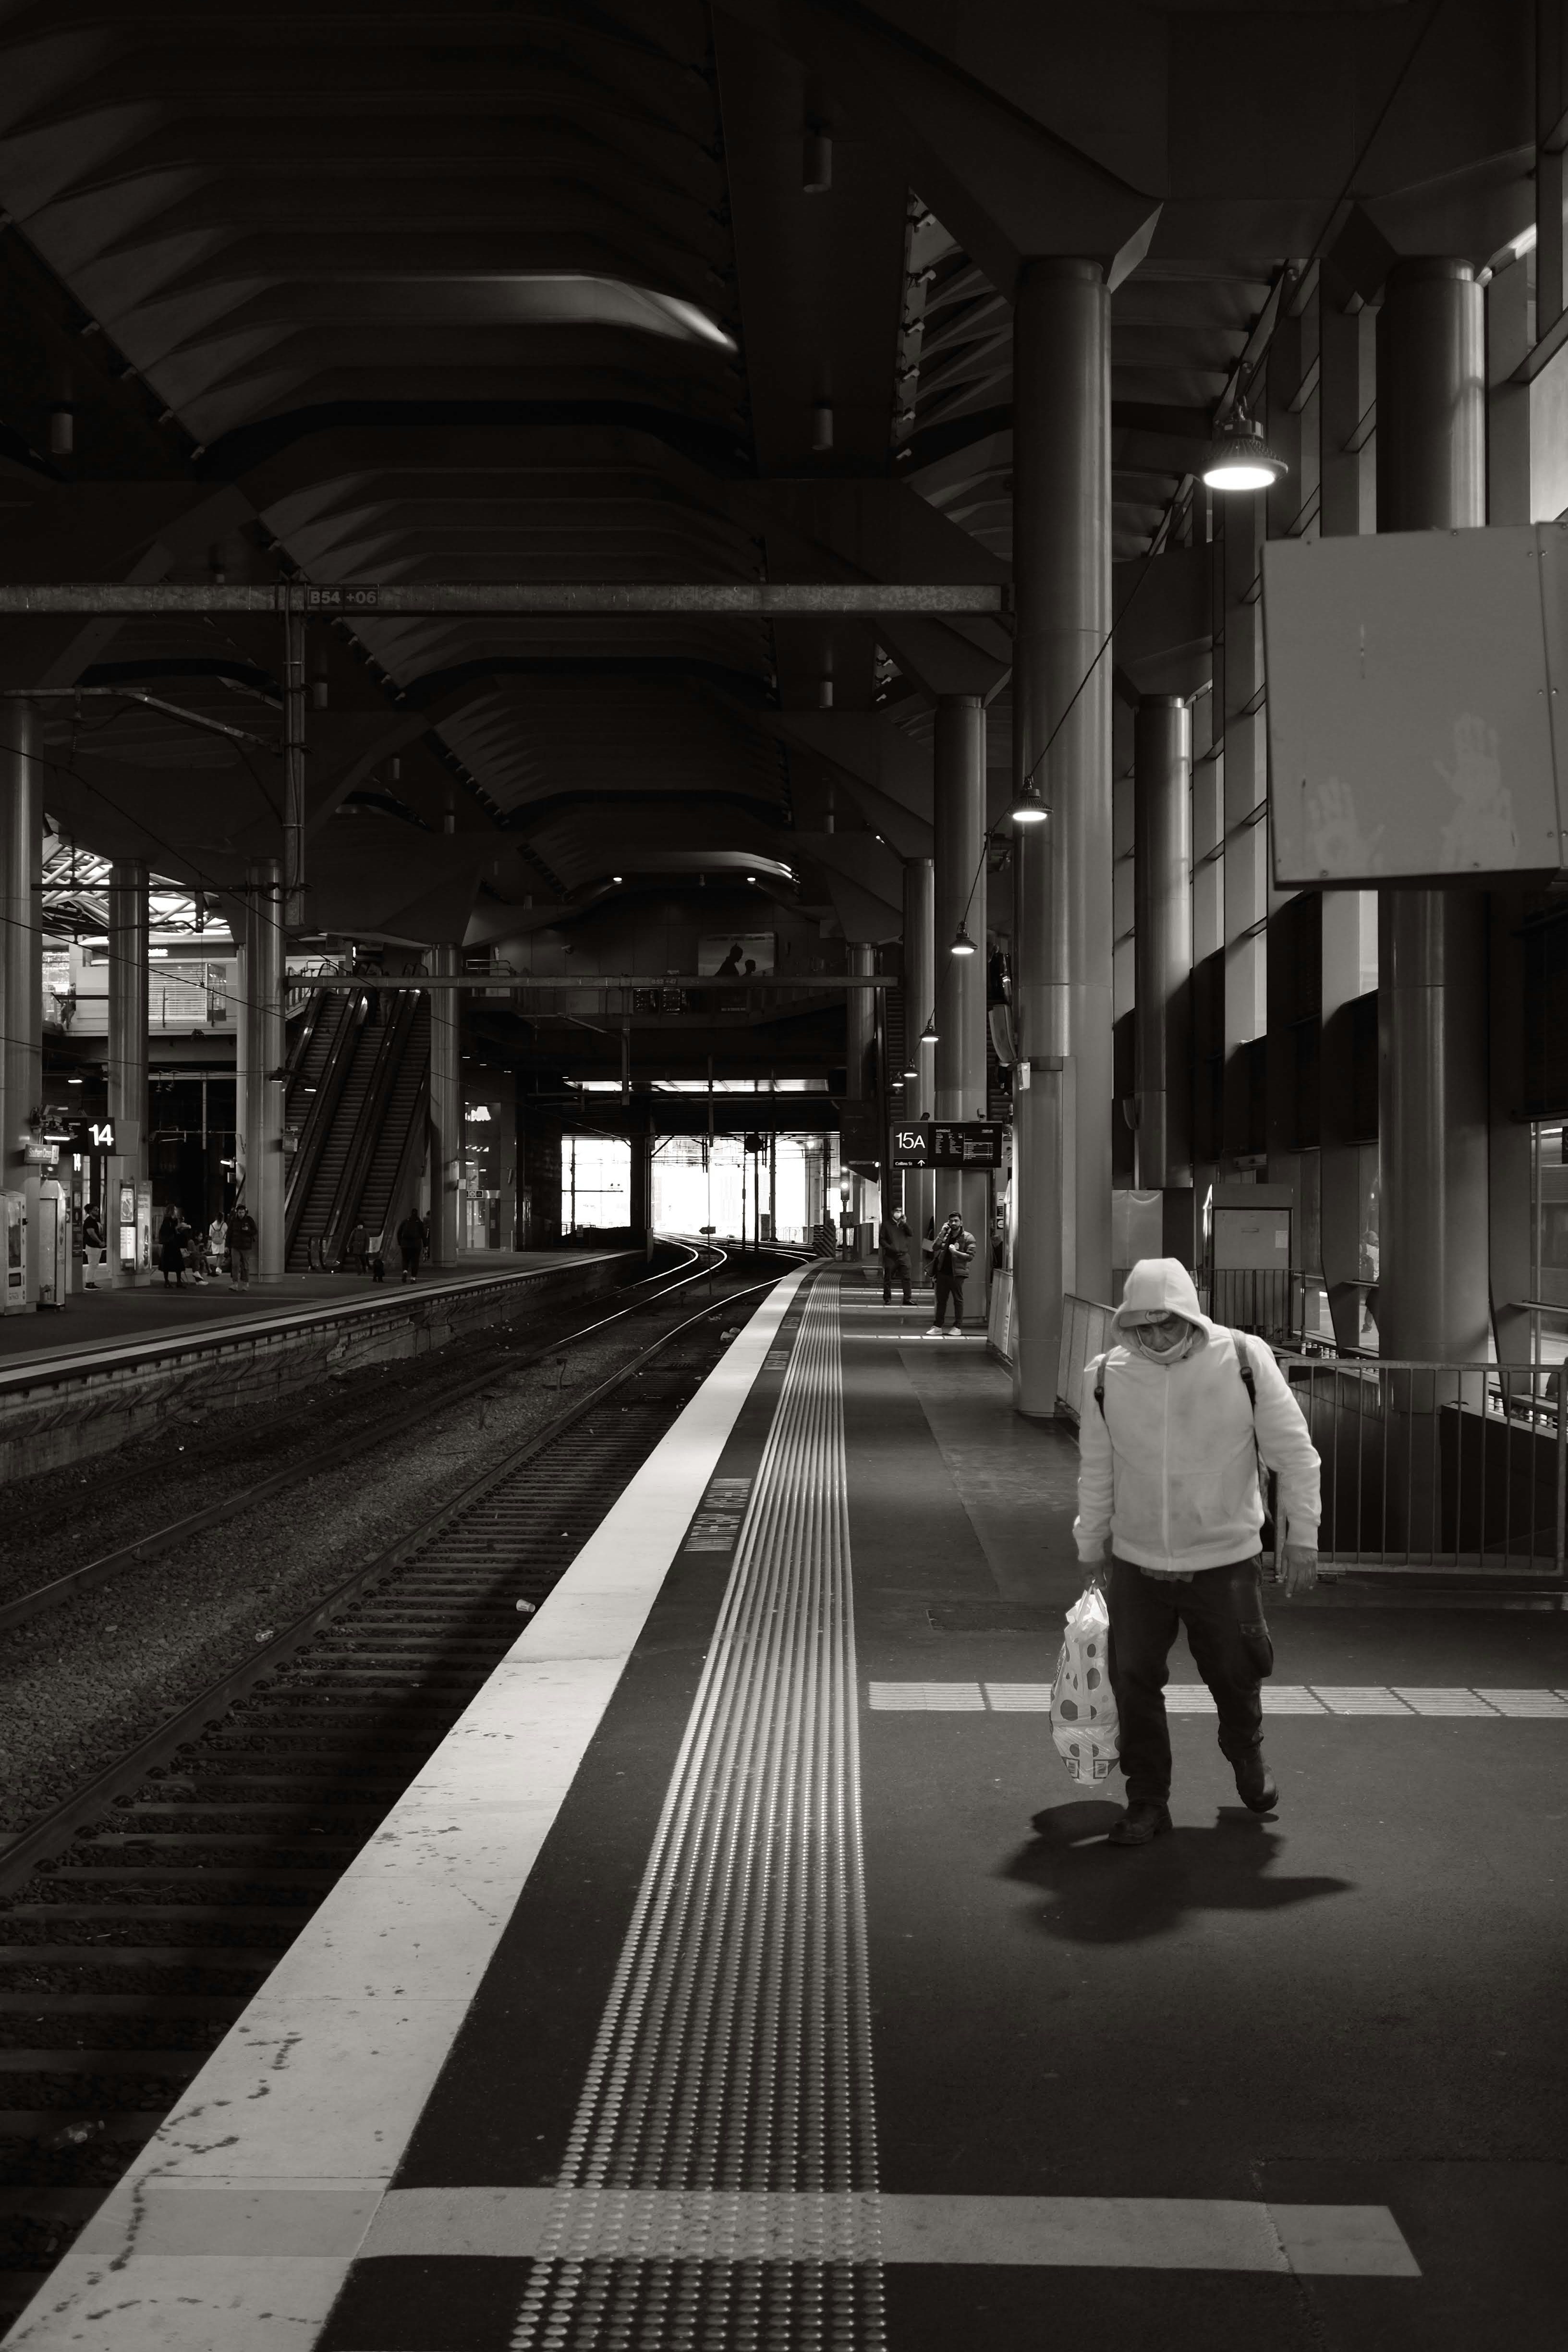 A commuter wearing a large warm jacket walks under a streetlight on the train platform